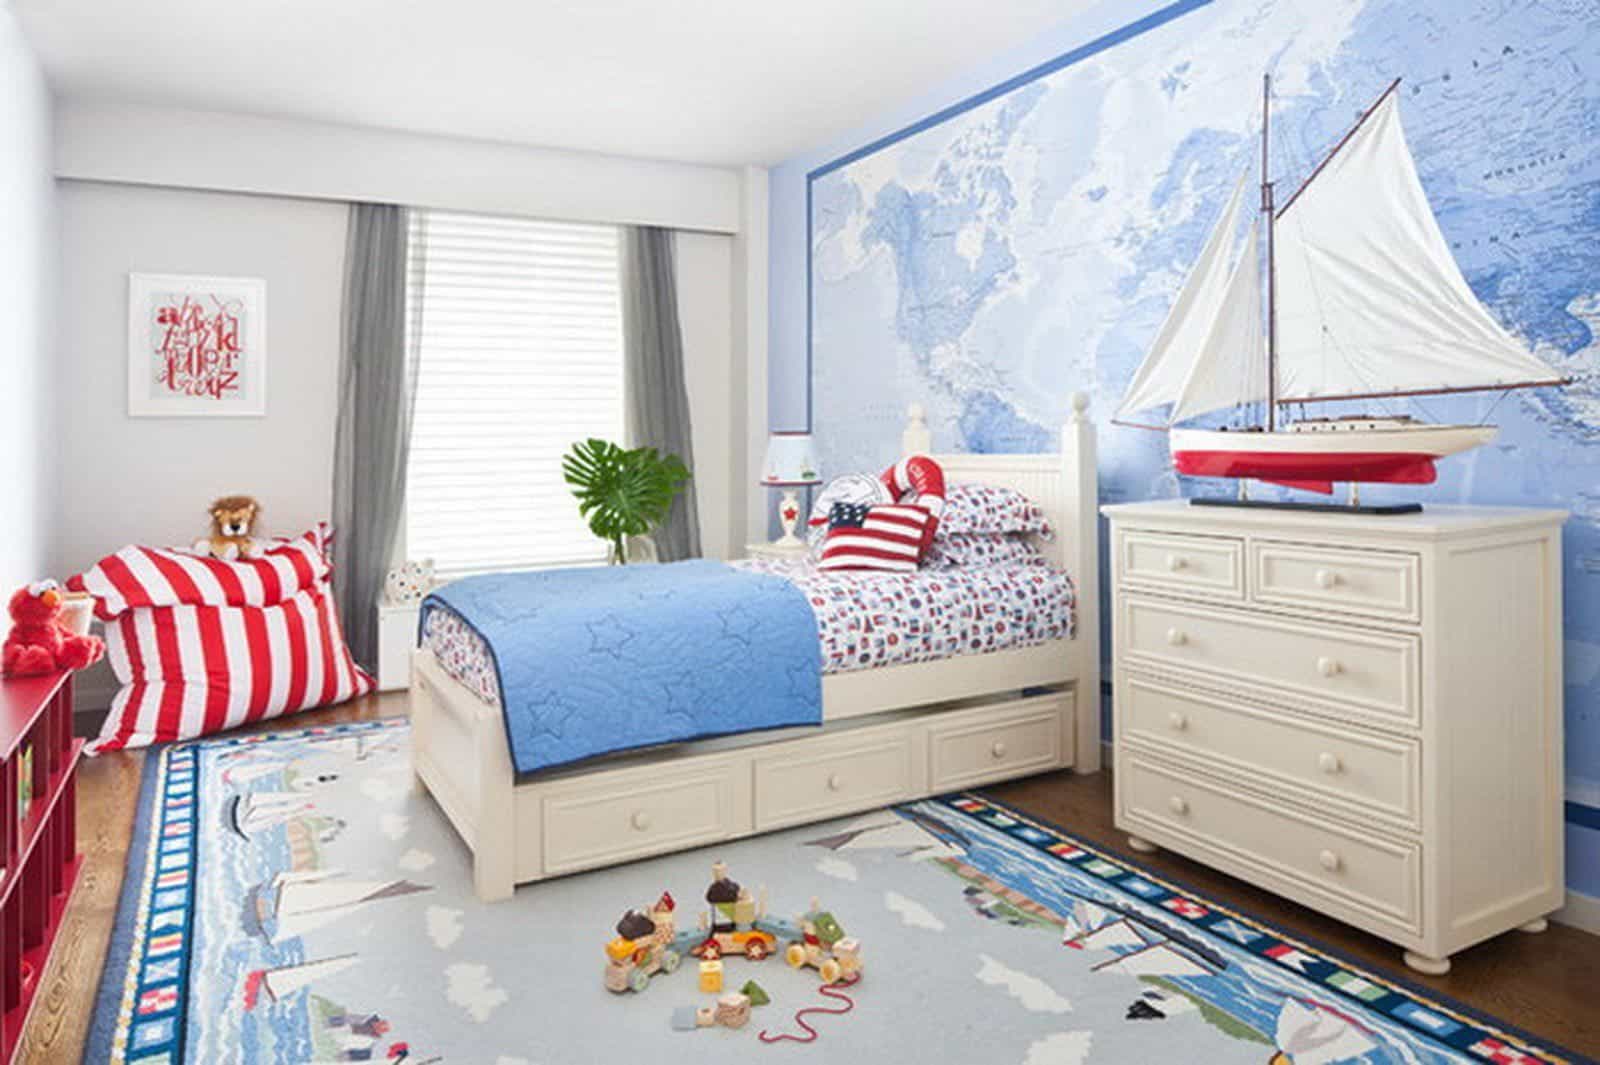 5 nautical themed bedding